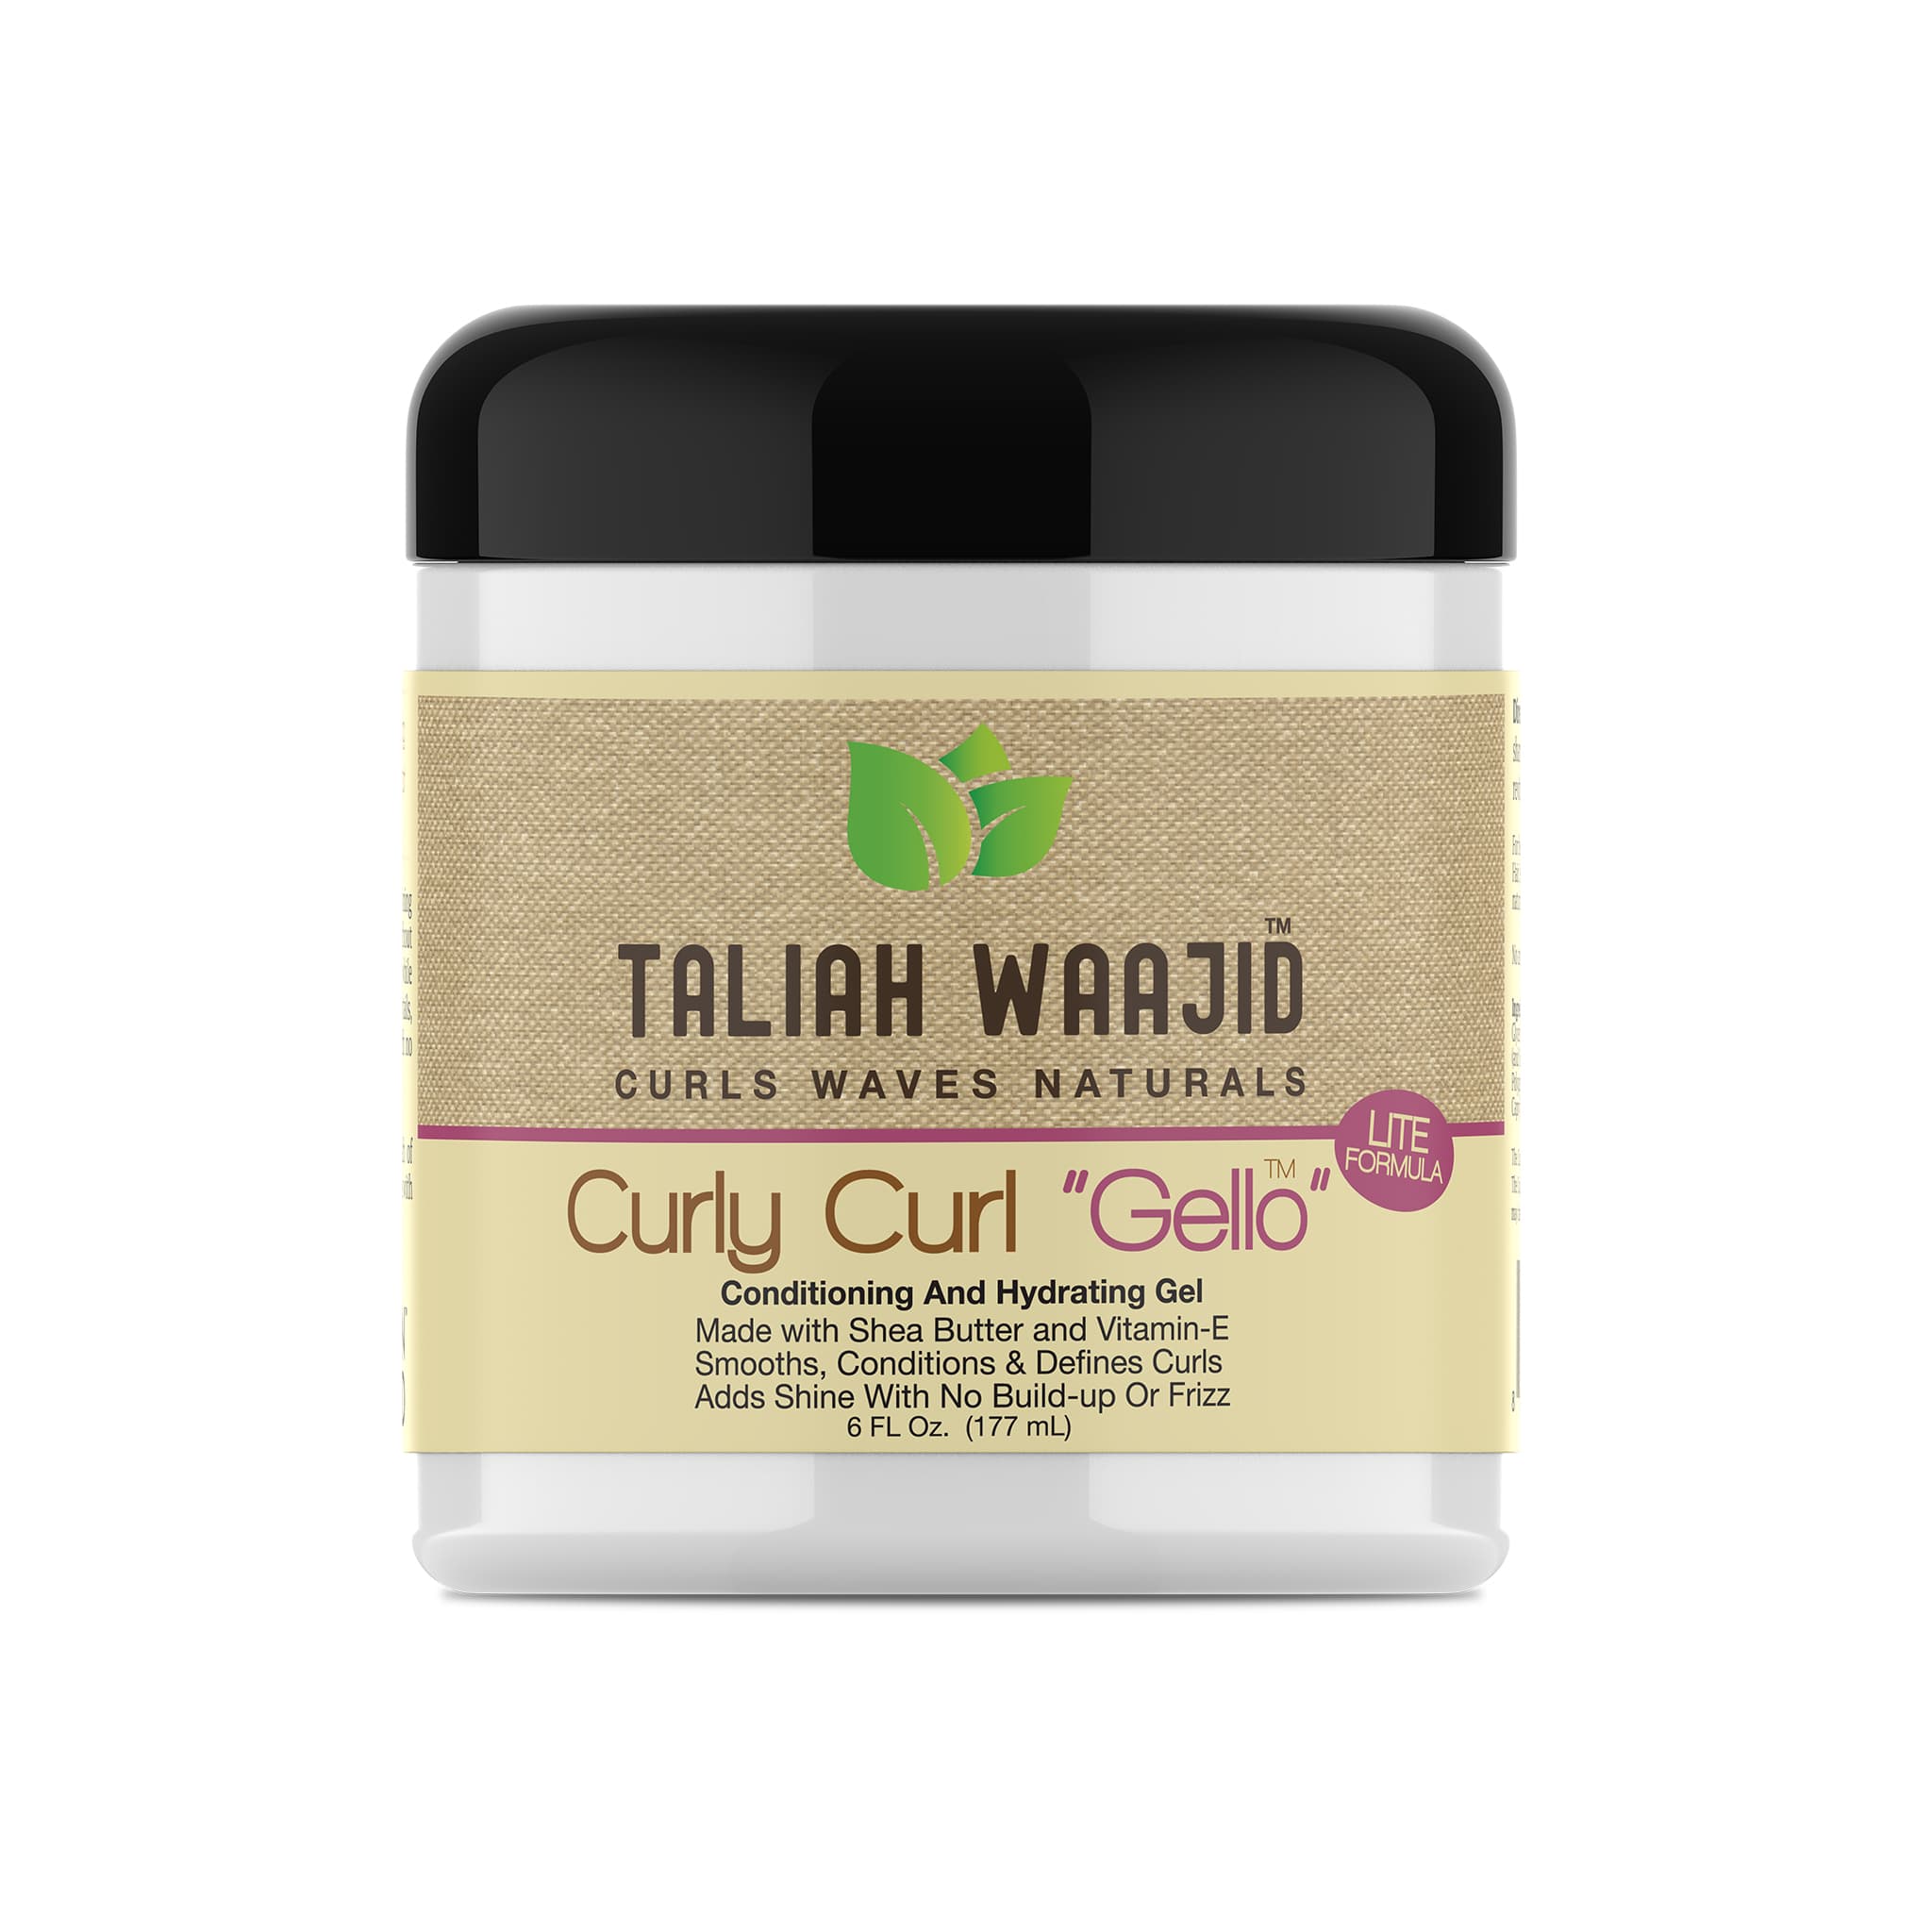 Taliah Waajid Curls, Waves & Naturals Curly Curl “Gello” 6oz